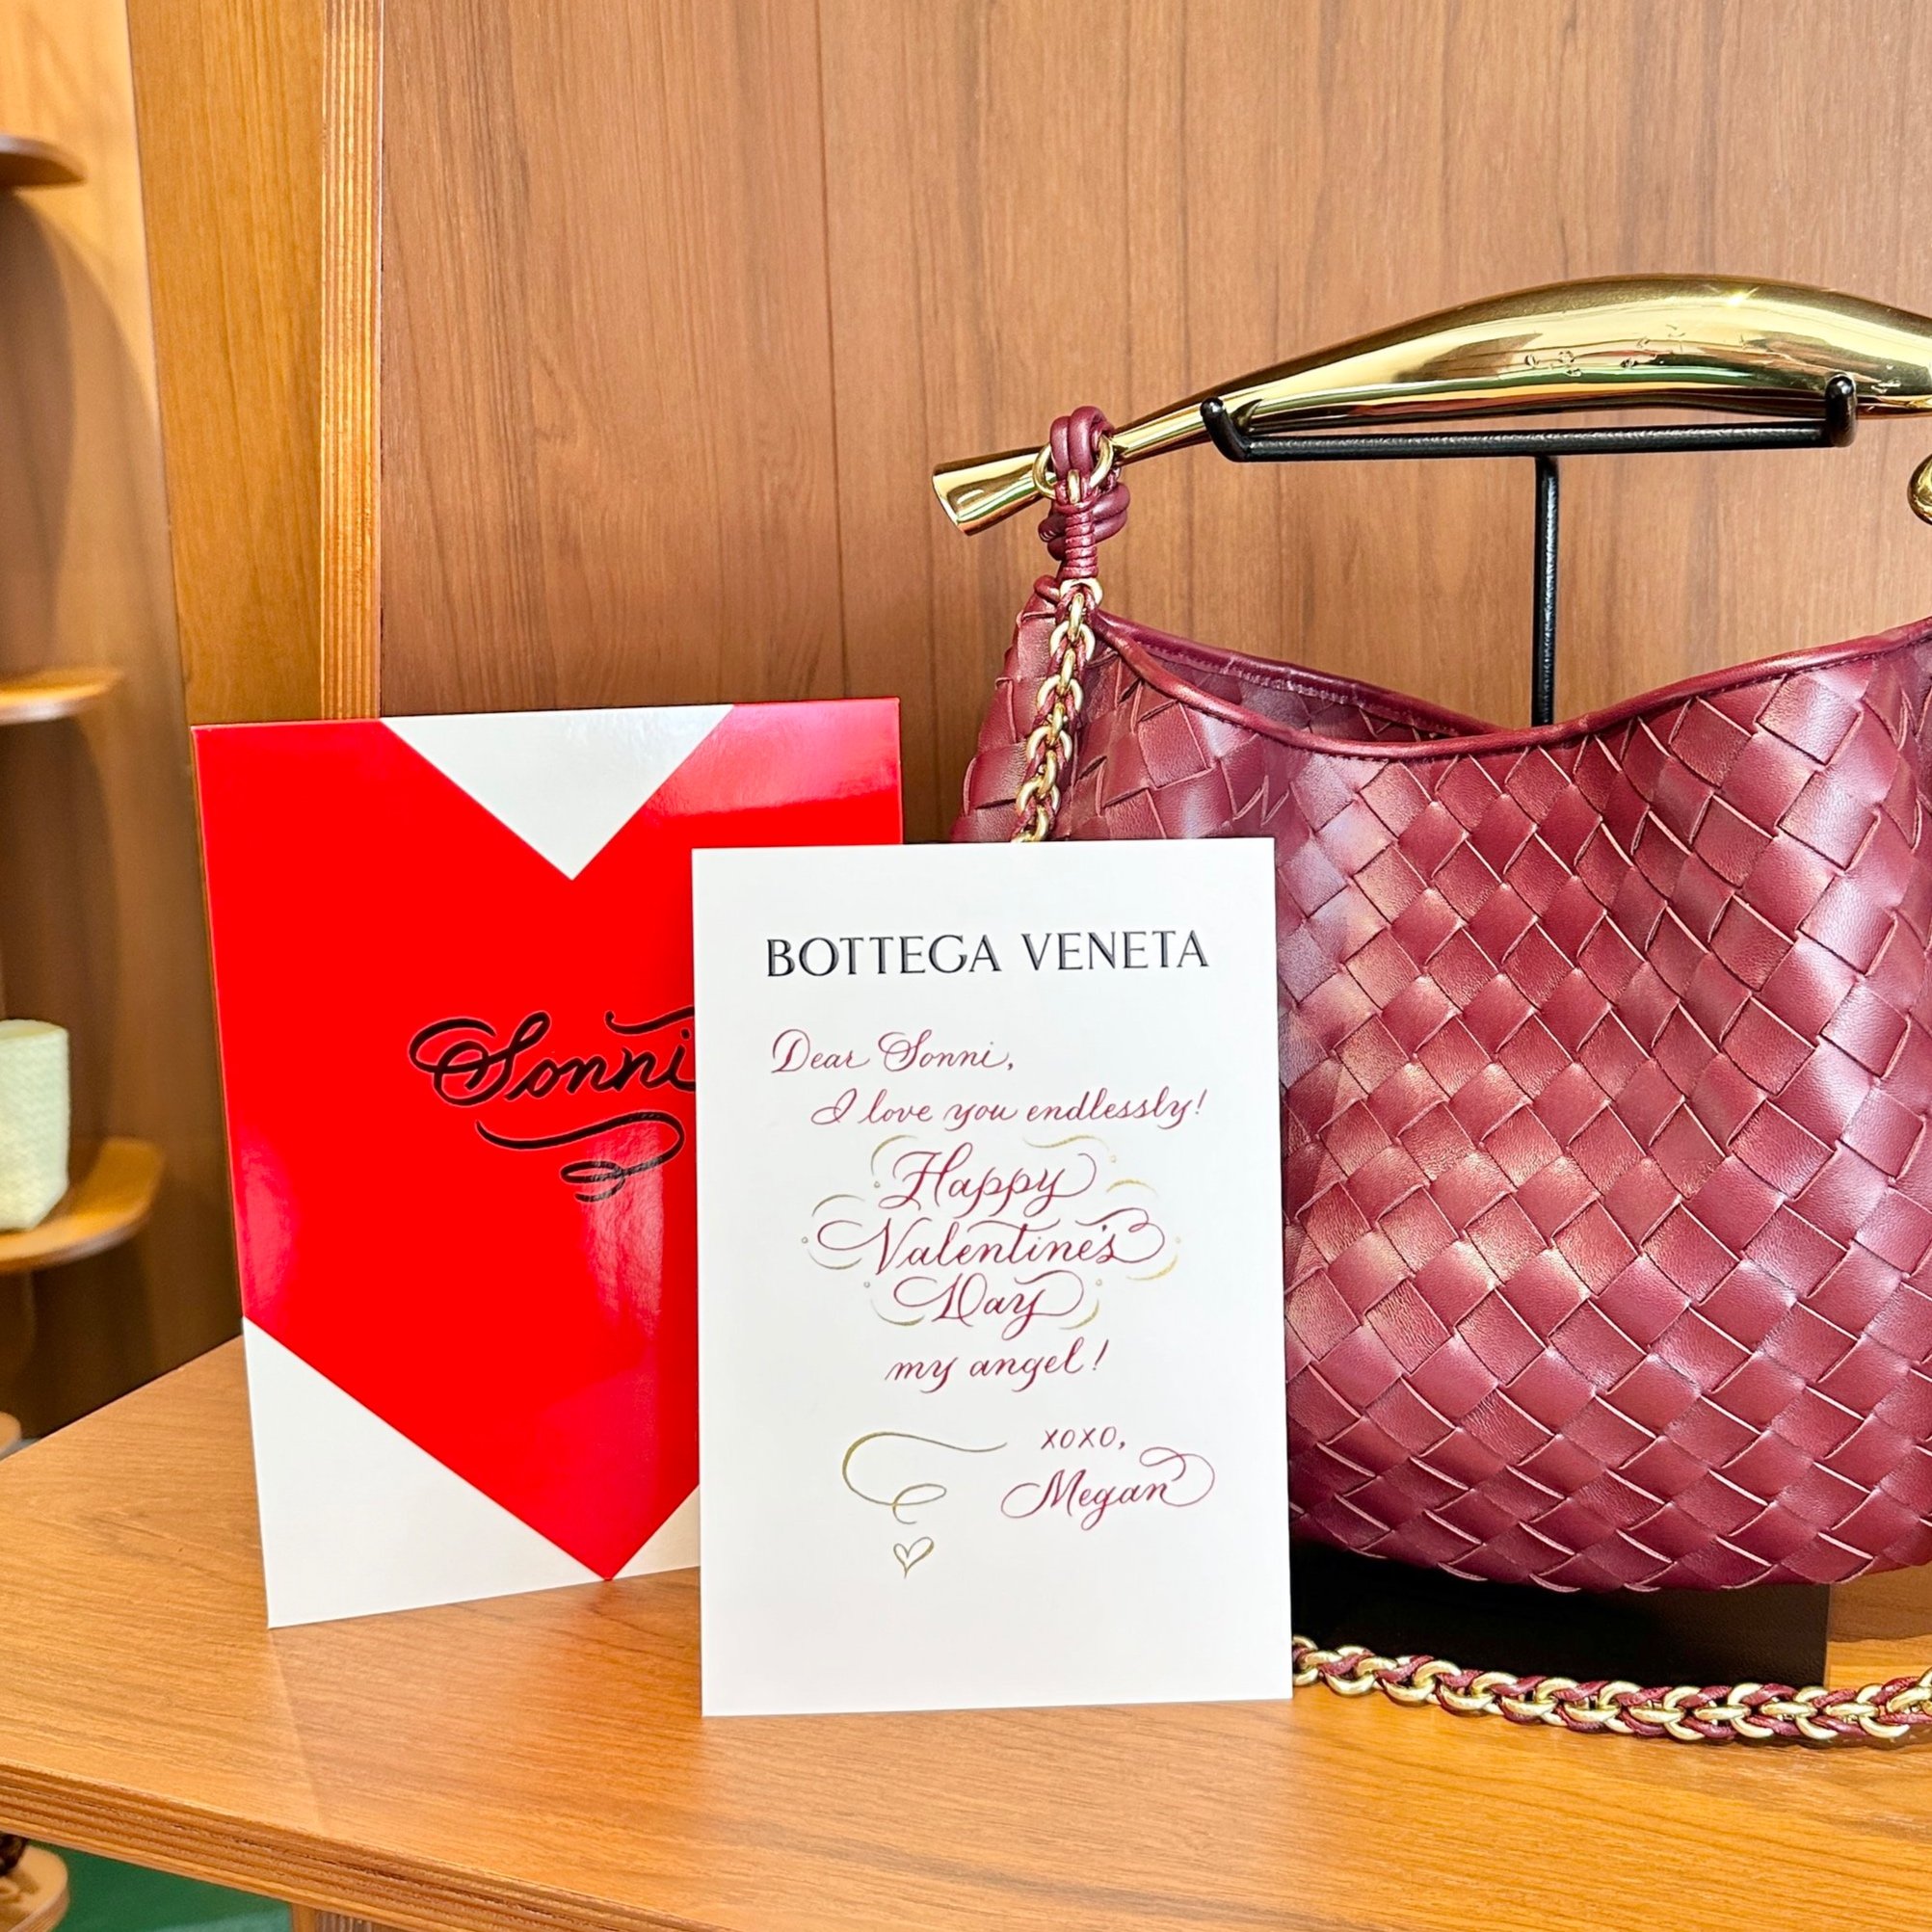 Valentine's Day cards - Bottega Veneta (Pacific Palisades)